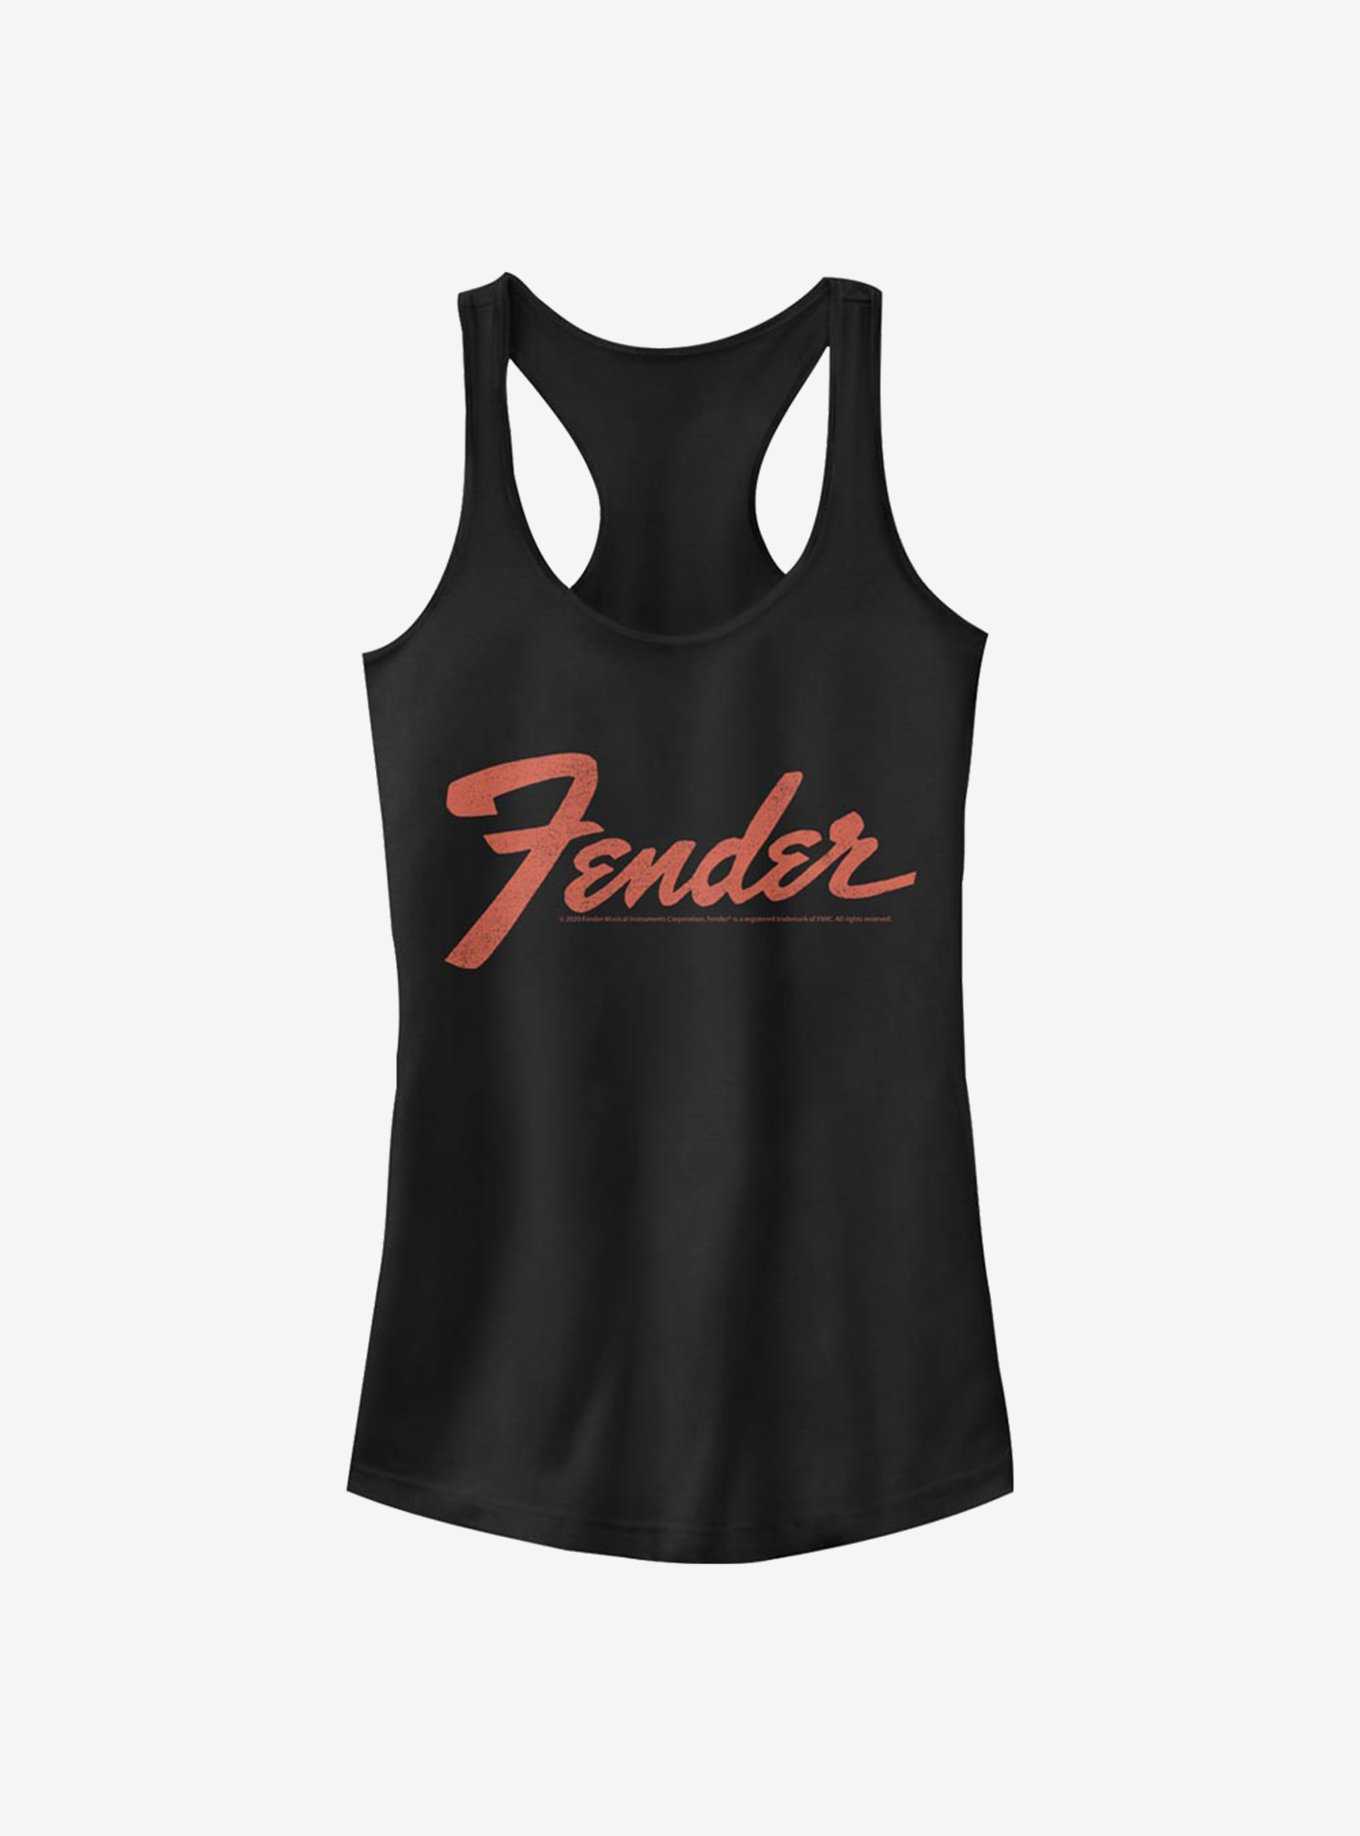 Fender Classic Logo Girls Tank, , hi-res